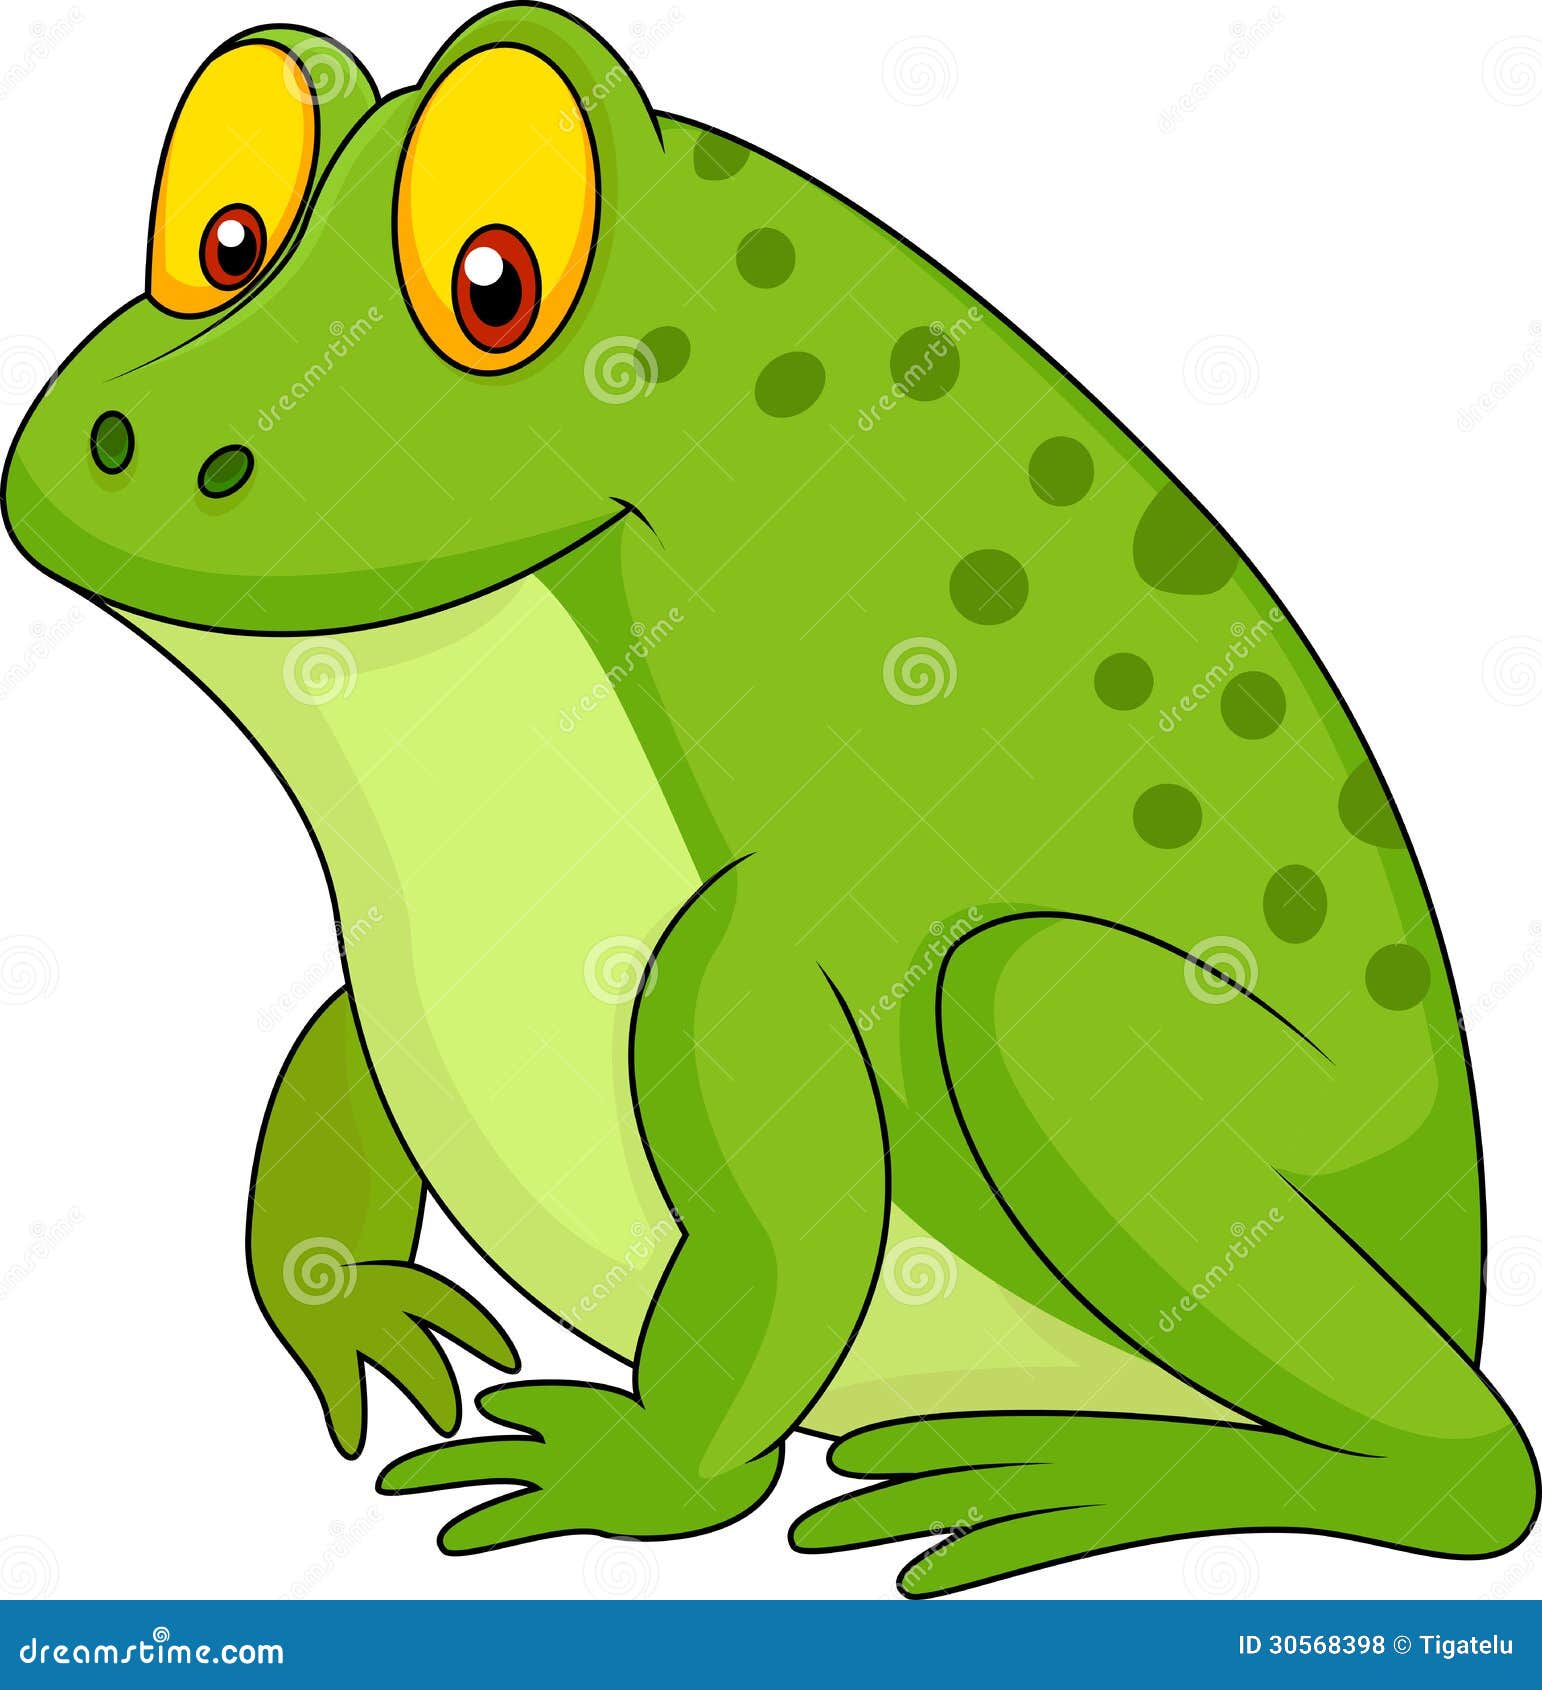 cute green frog cartoon